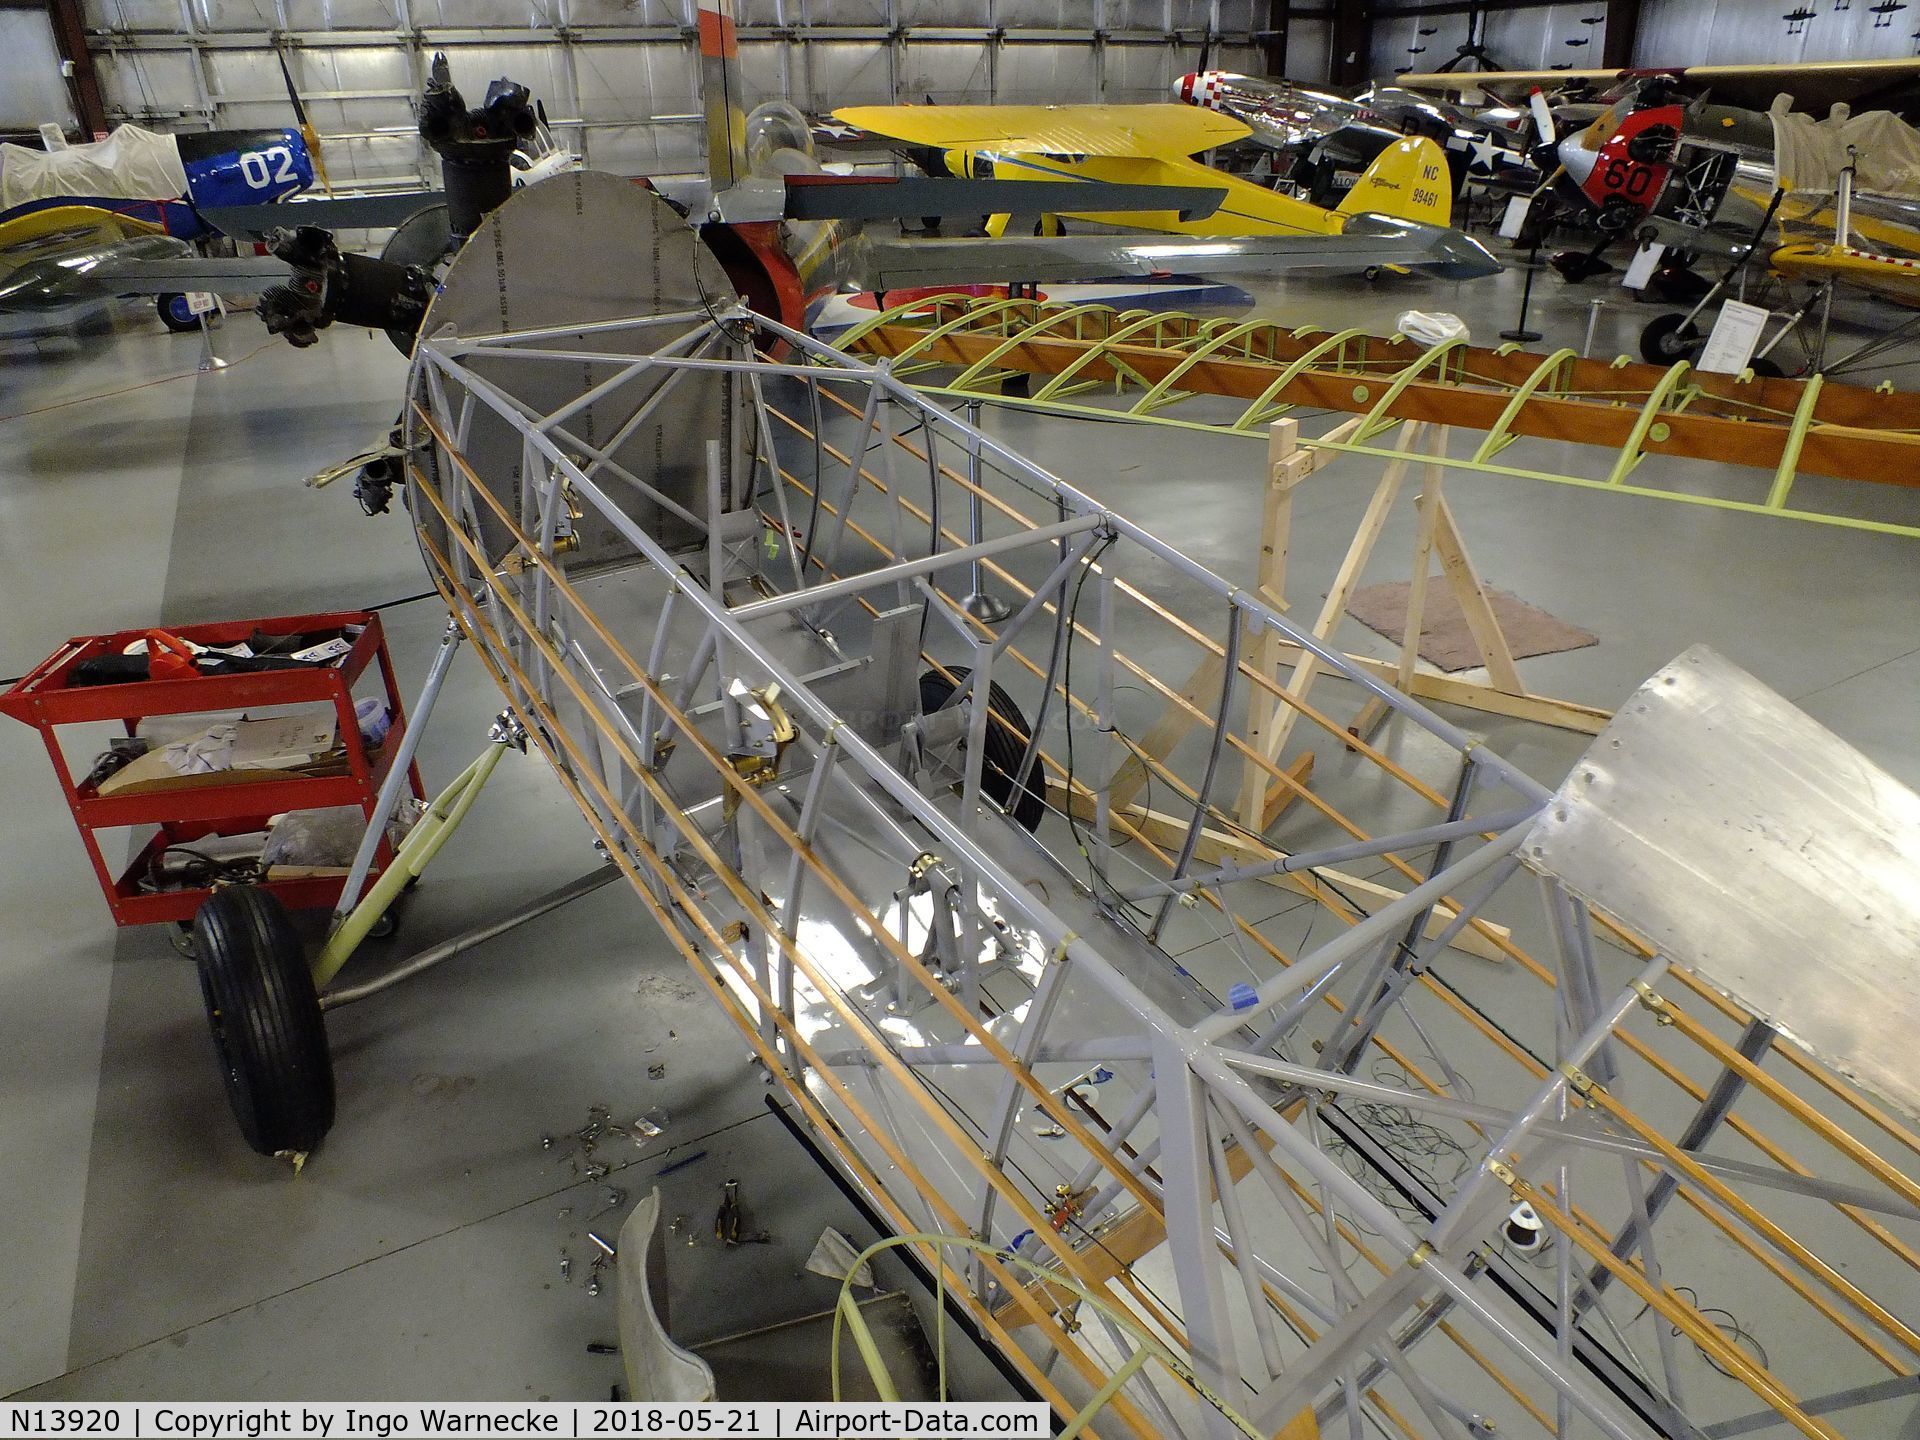 N13920, Fleet Model 9 C/N 505, Fleet Model 9 (minus skin, wings disassembled) being restored at the Air Combat Museum, Springfield IL